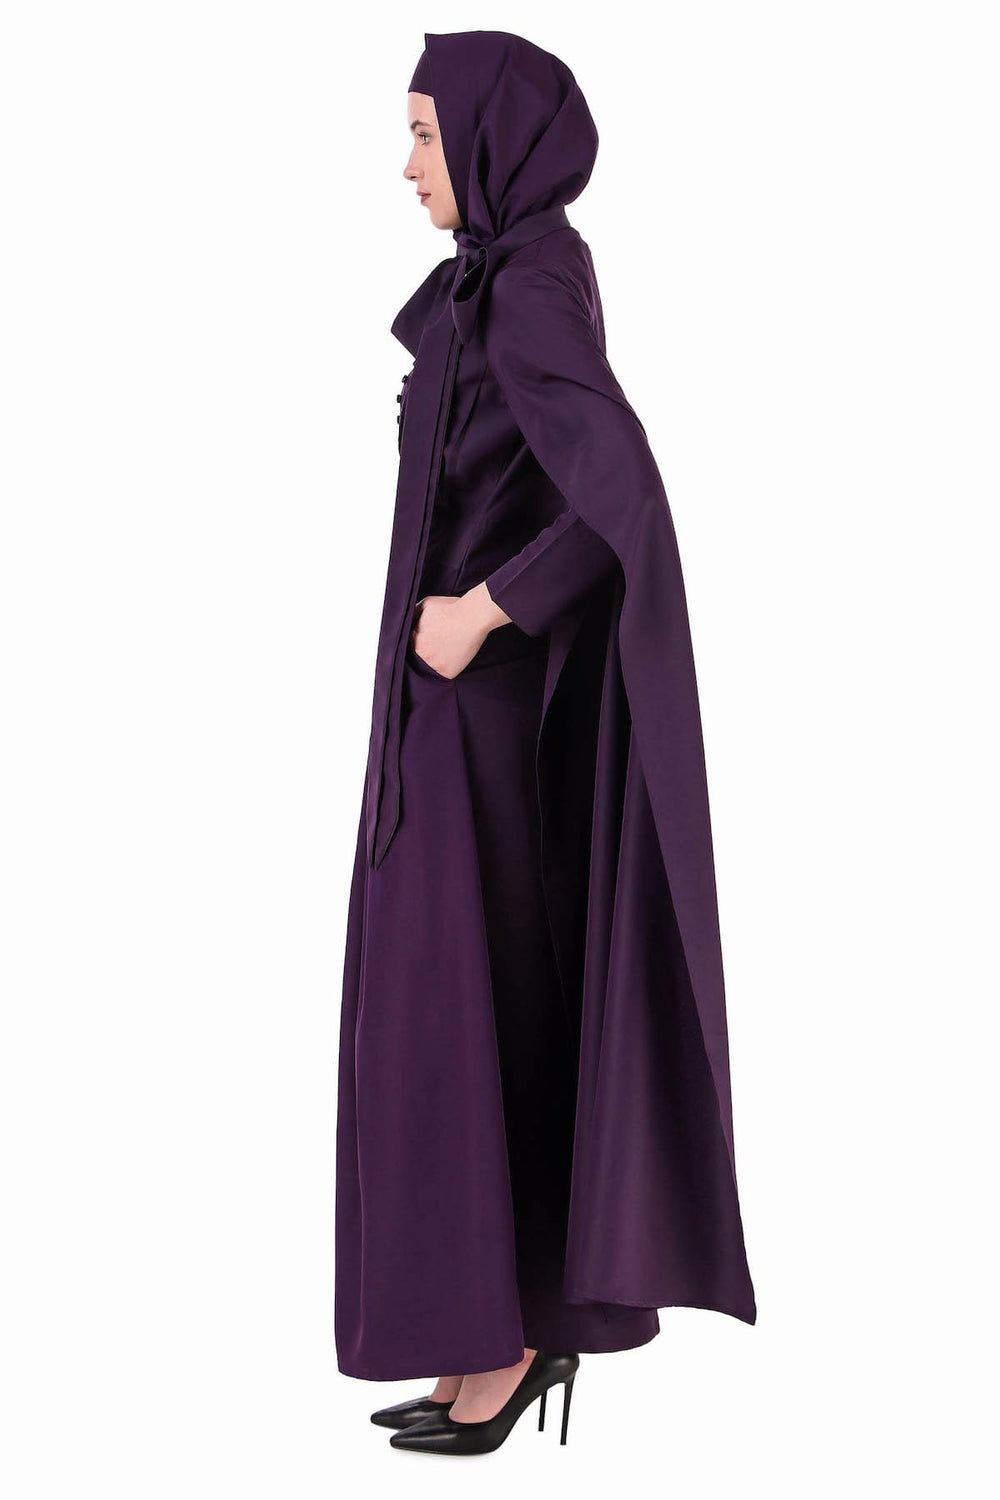 Designer Royal Look Hanging Sleeves Abaya